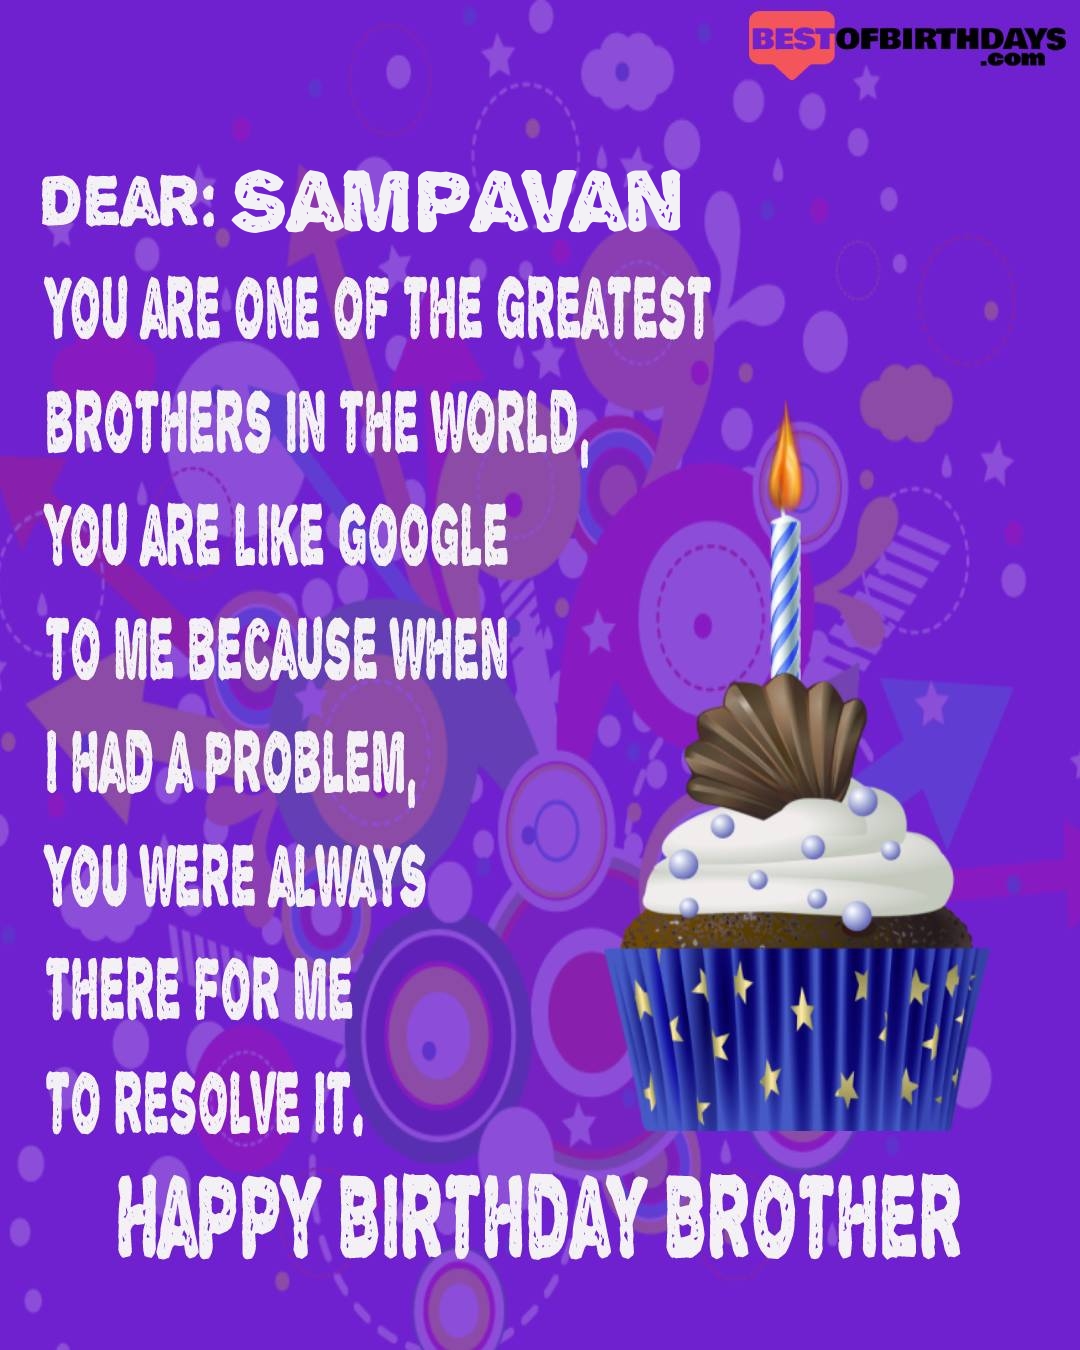 Happy birthday sampavan bhai brother bro